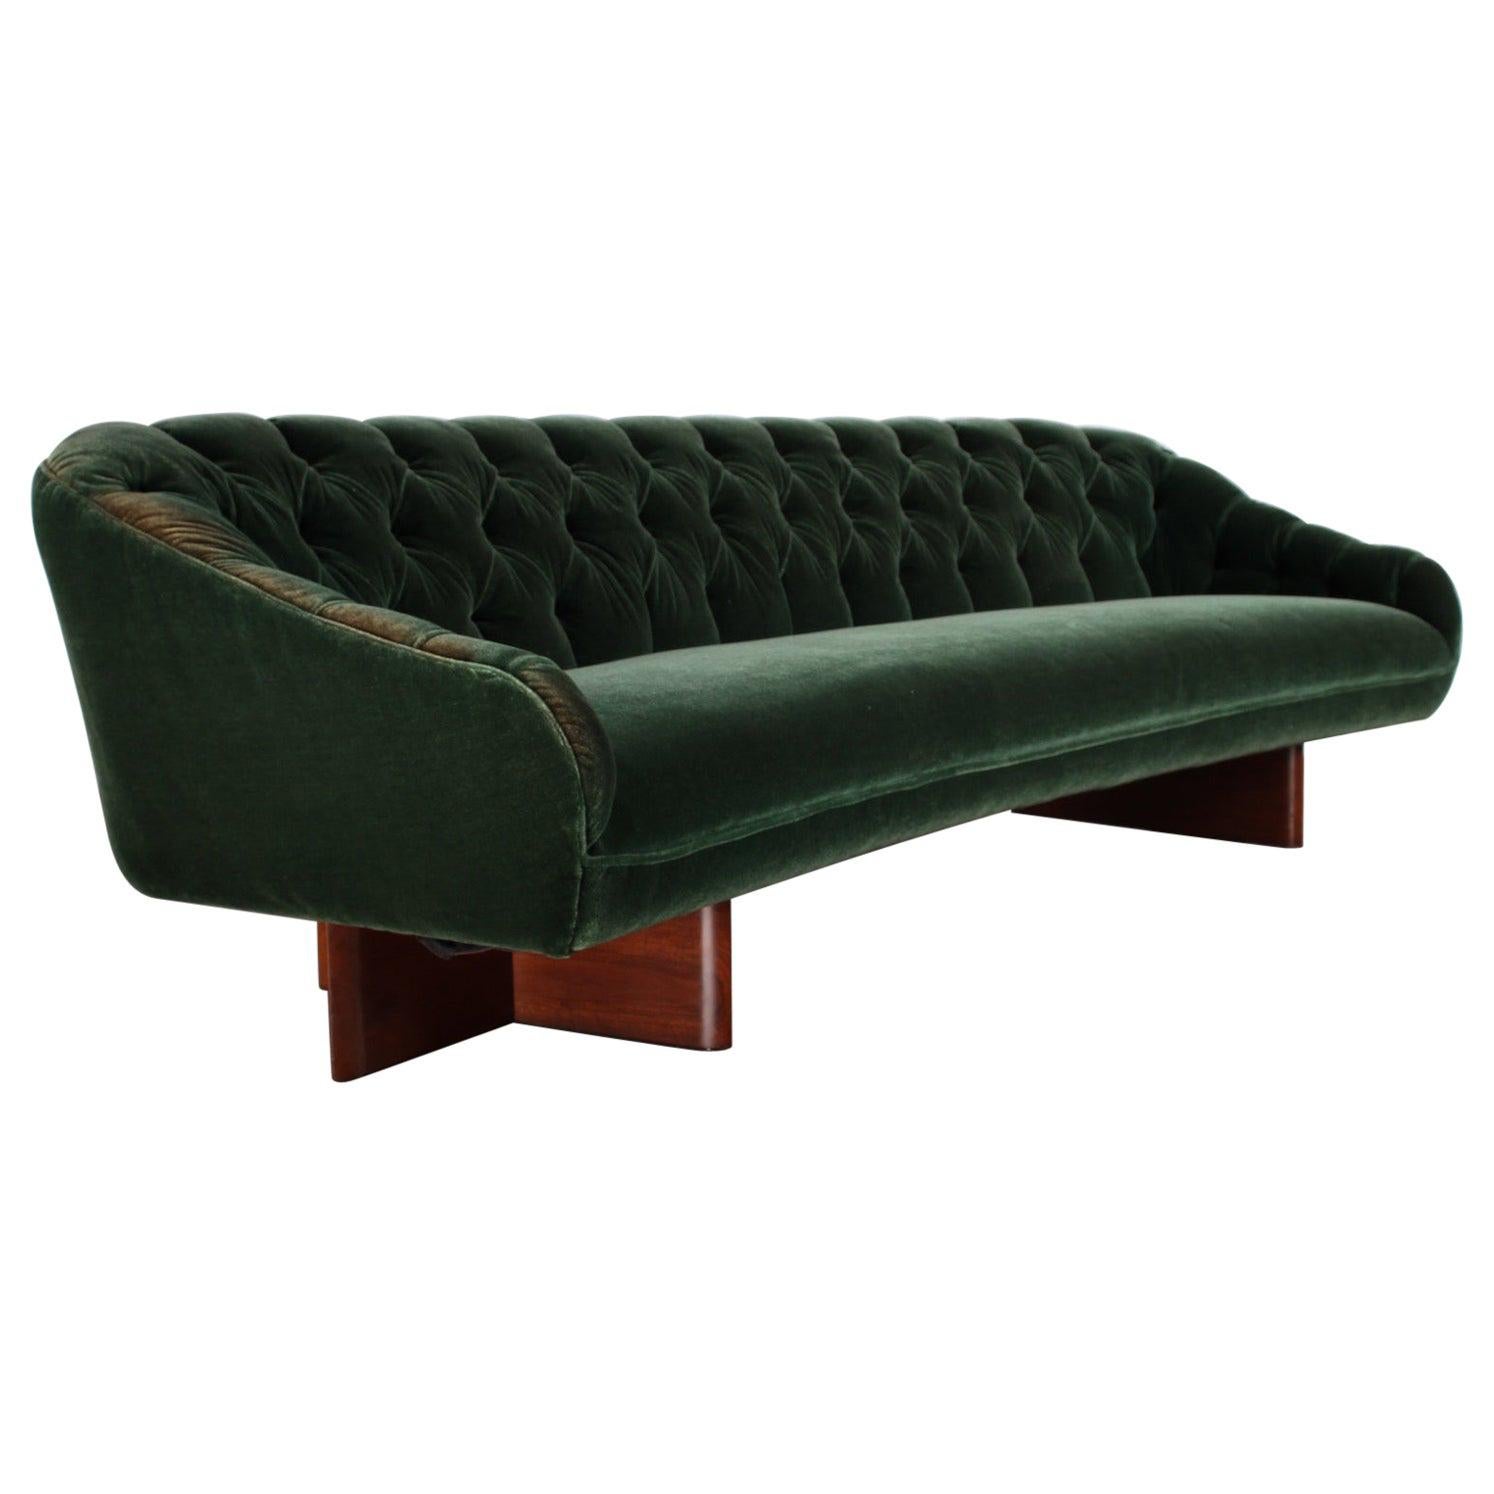 Custom Curved Sofa Attributed to Vladimir Kagan